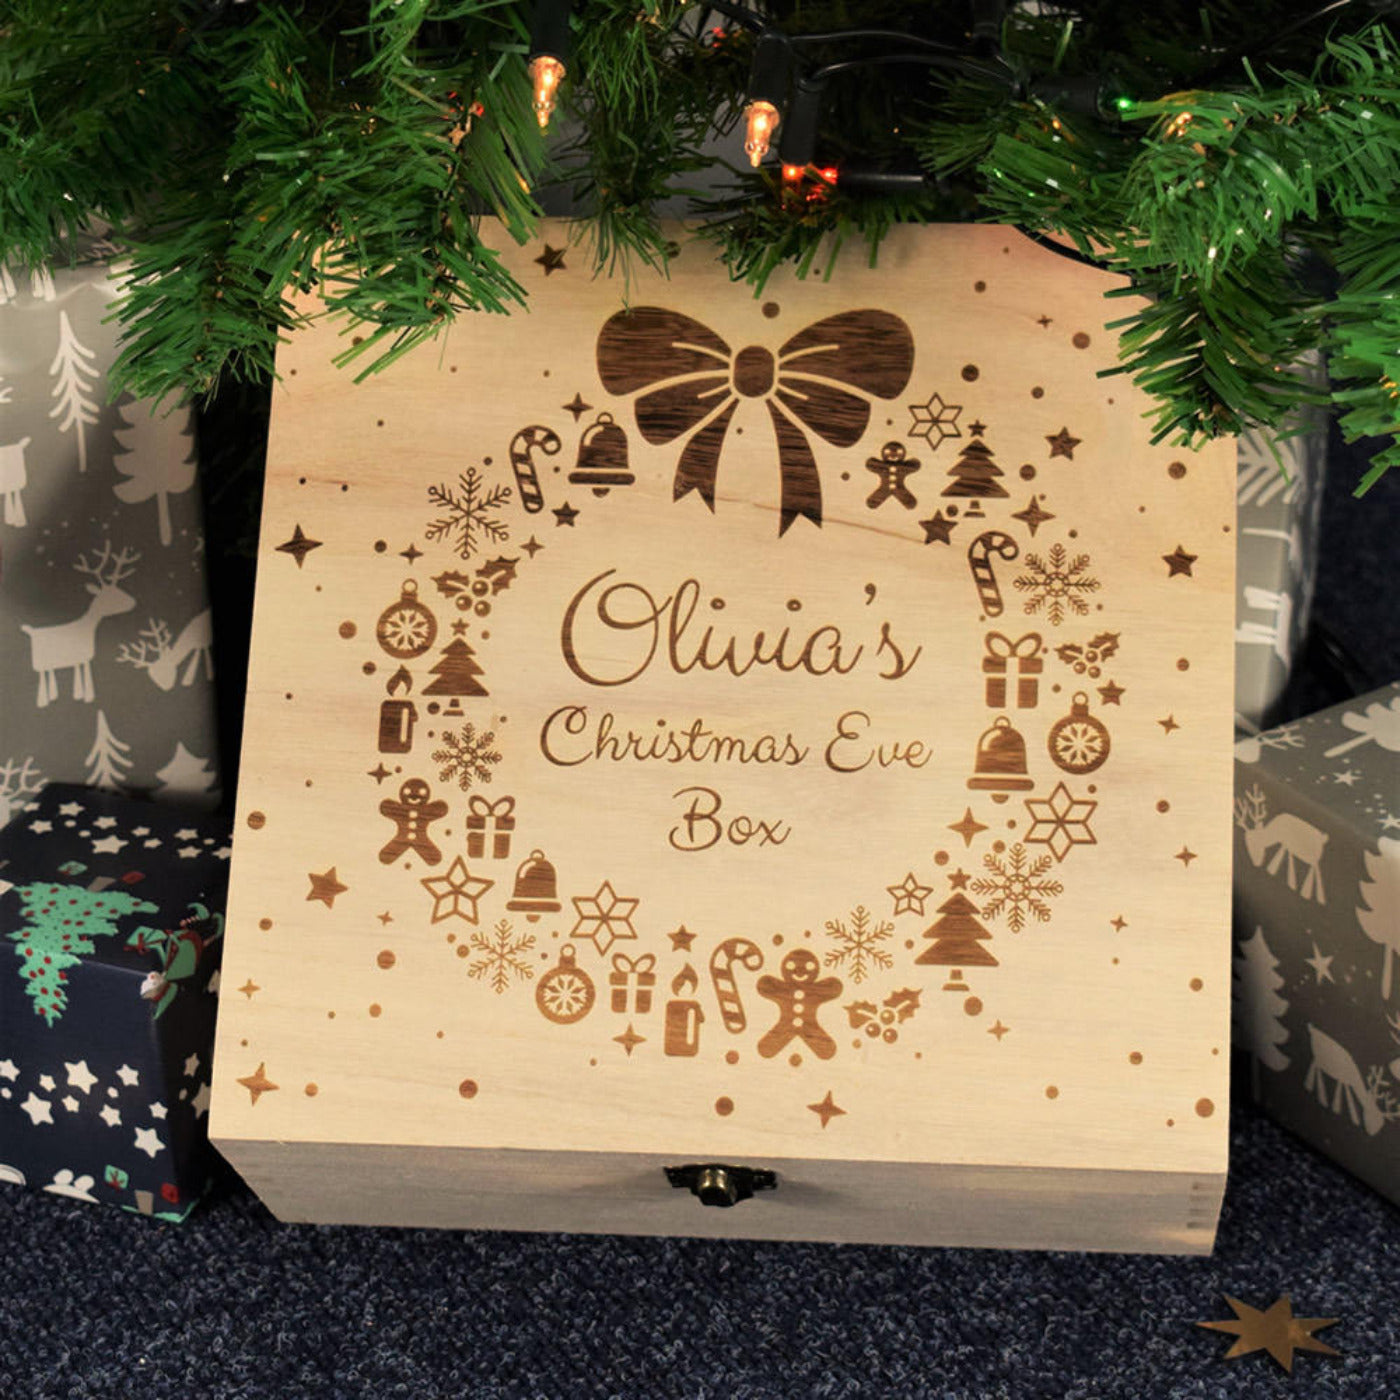 Christmas Eve Box - Wreath Design